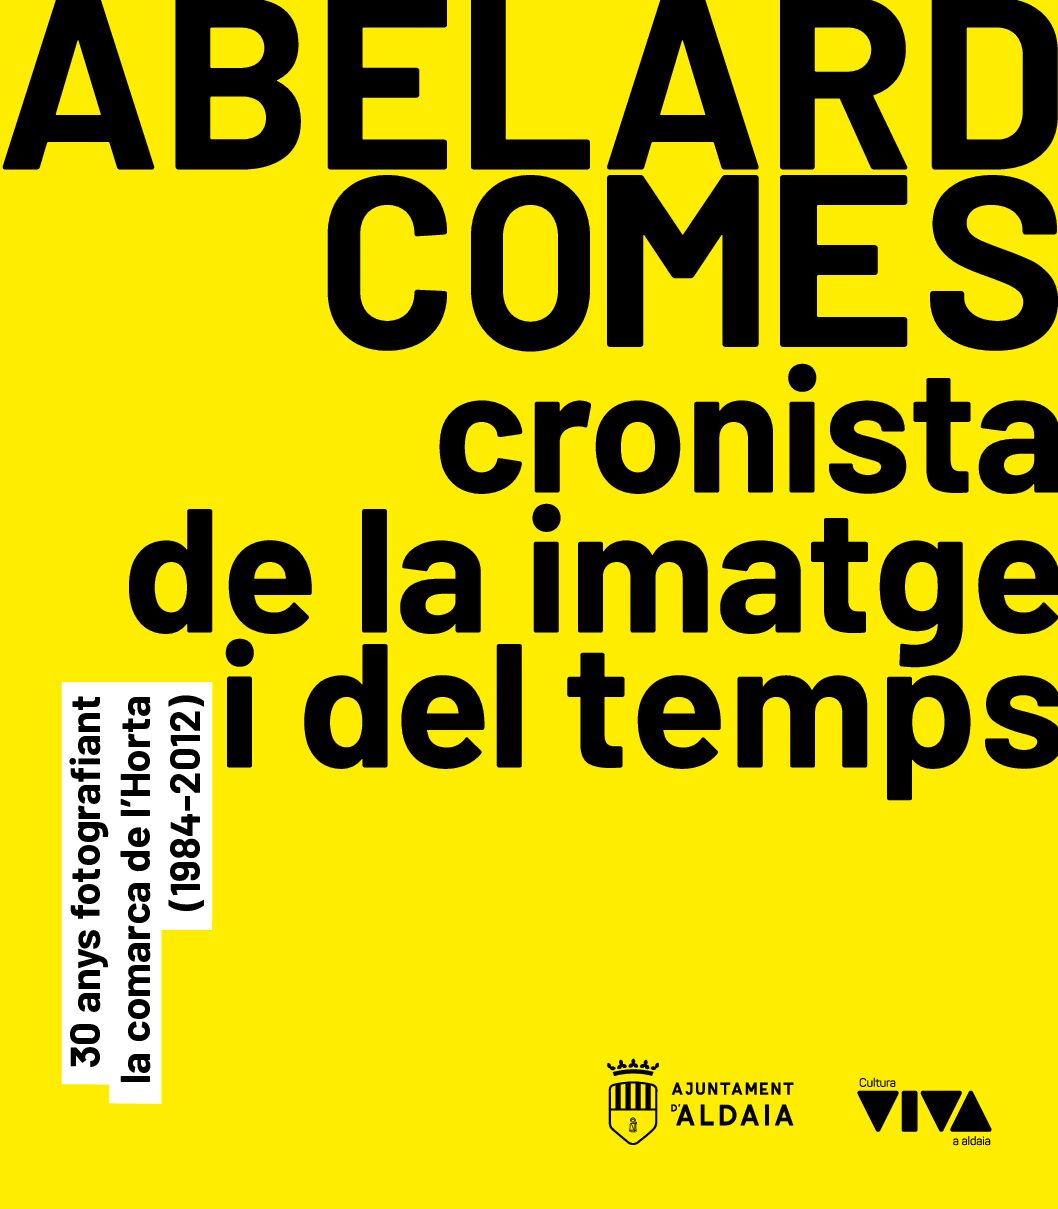 Cataleg Abelard Comes, cronista de la imatge